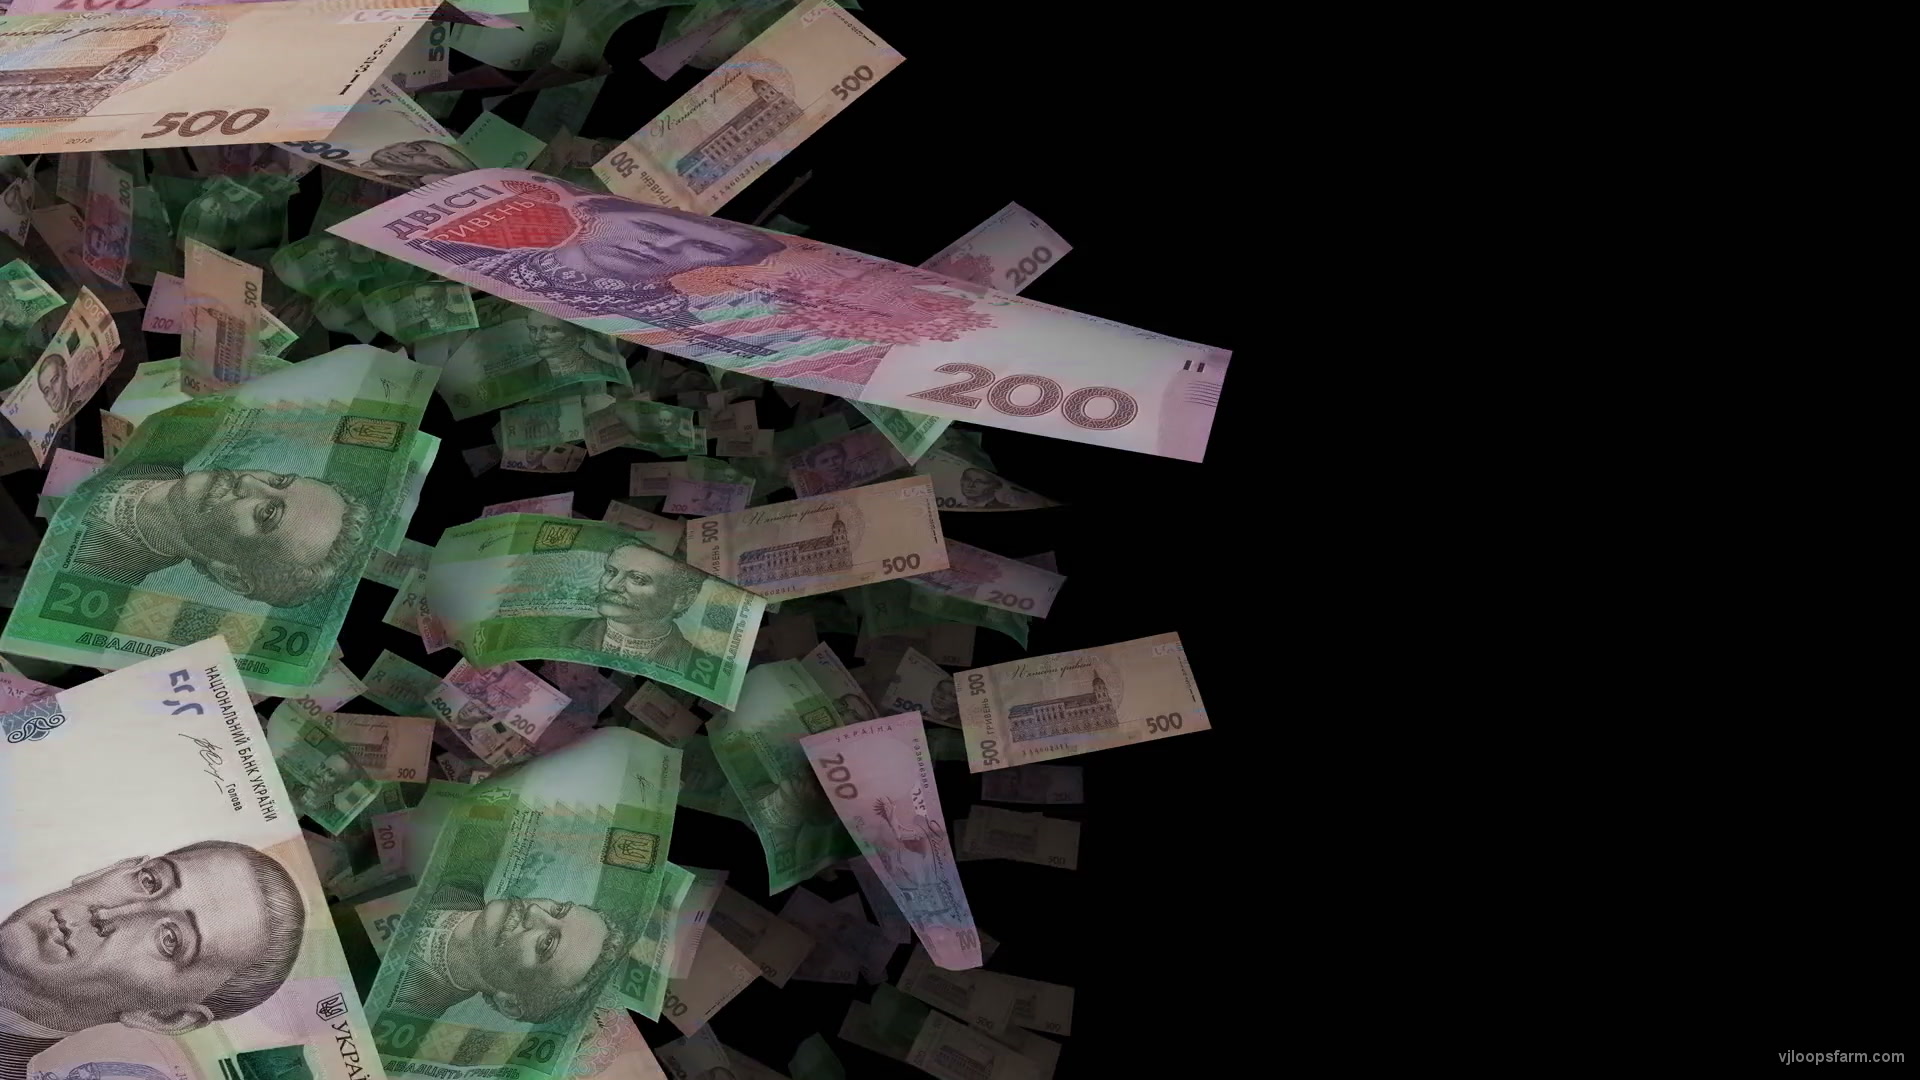 Ukrainian currency hrivna paper bills rotating in cloud on black background